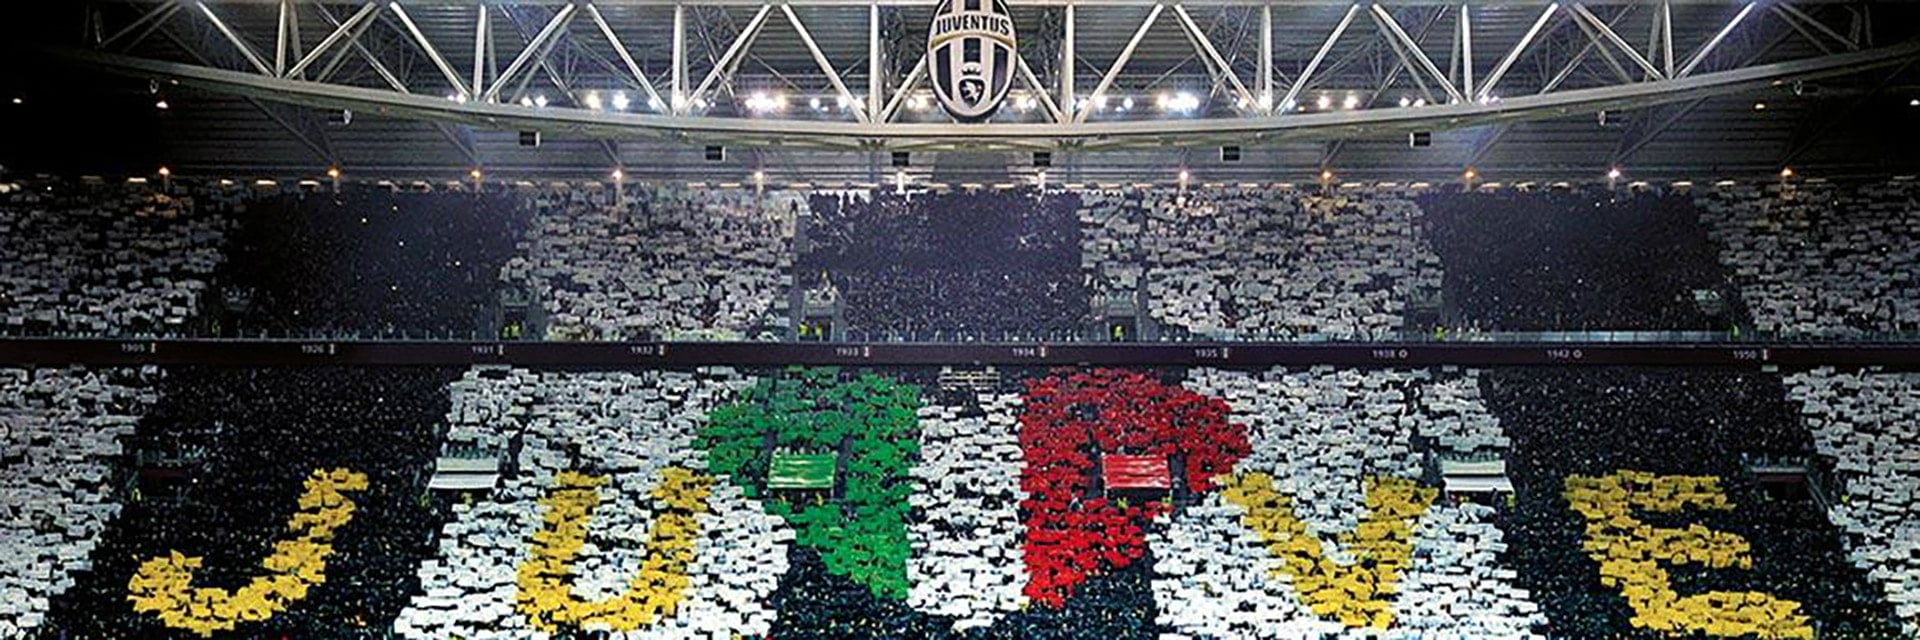 Juventus FC - Genoa CFC, 7 marsden 12:30